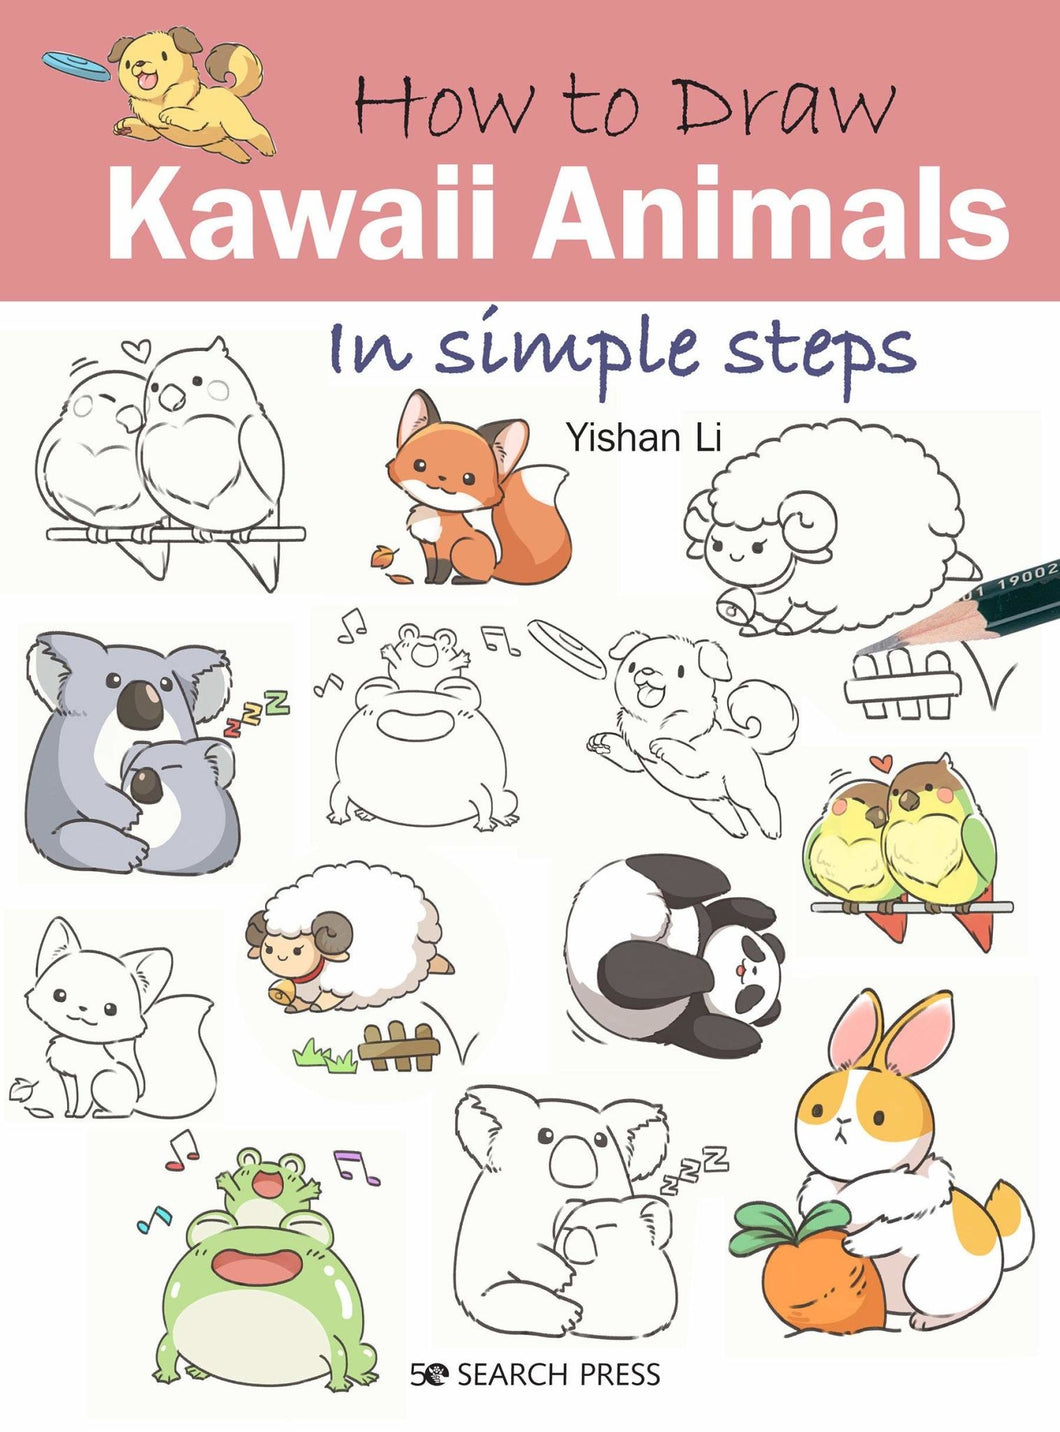 “How to Draw Kawaii Animals in Simple Steps” (Yishan Li)